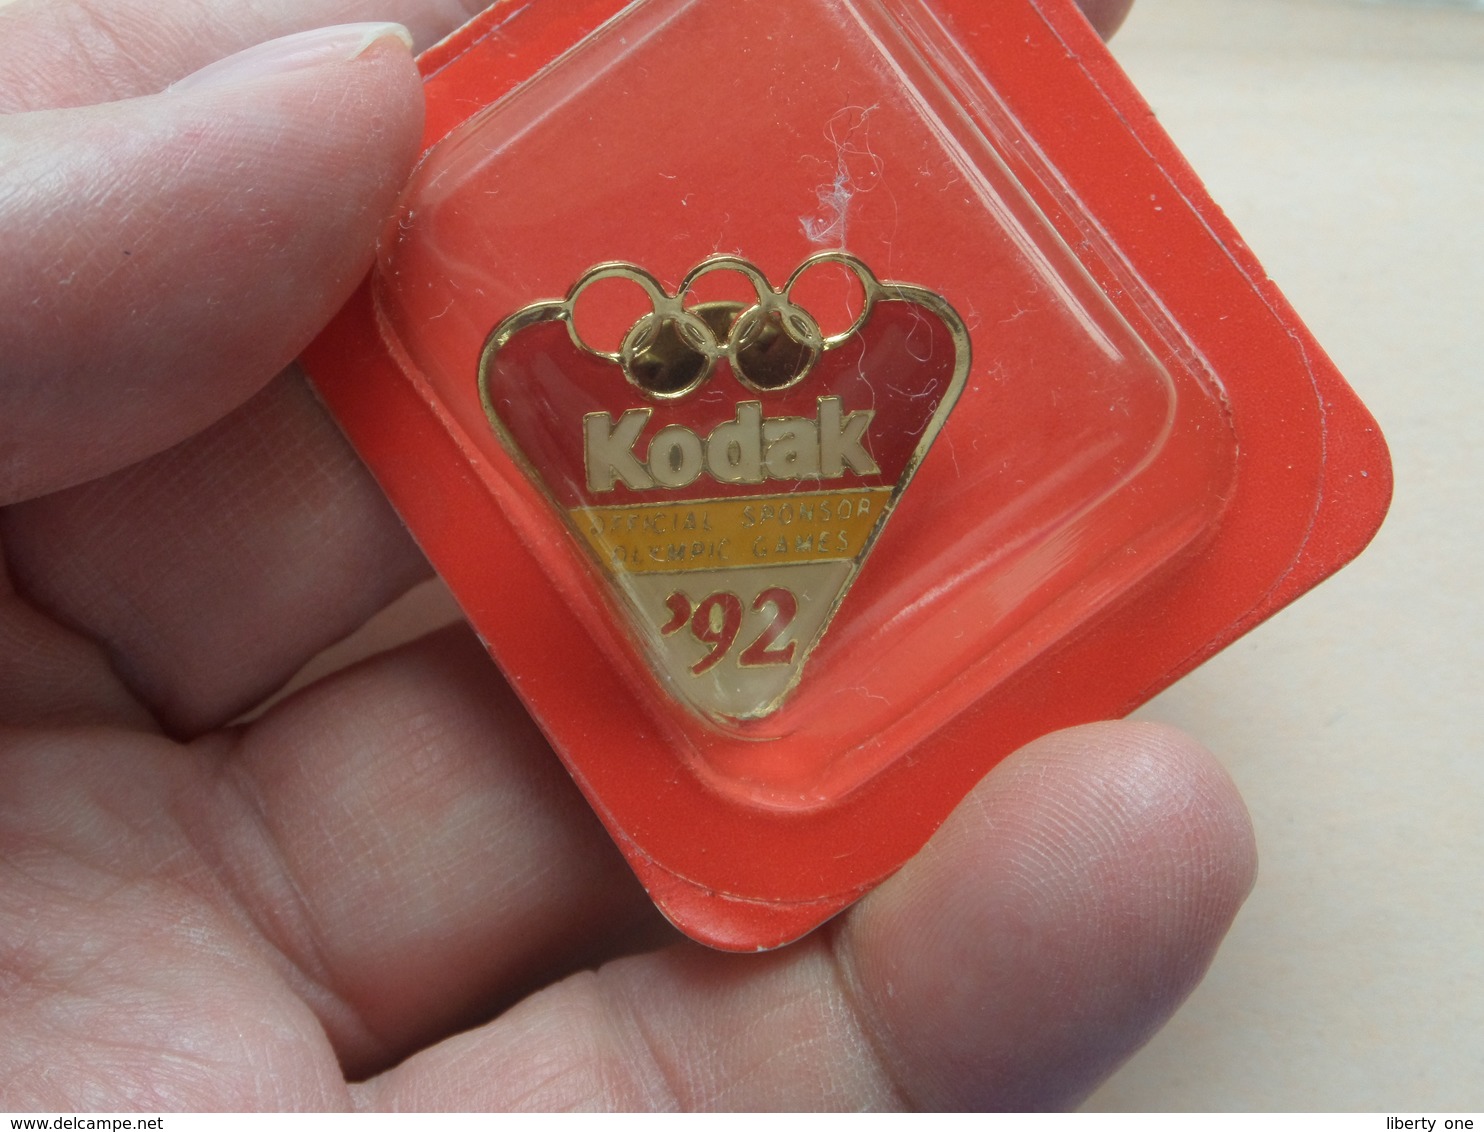 1992 - KODAK Official Sponsor Olympic Games '92 BARCELONA ( Zie Foto ) Pin - Brooch / Closed Box ! - Olympische Spelen